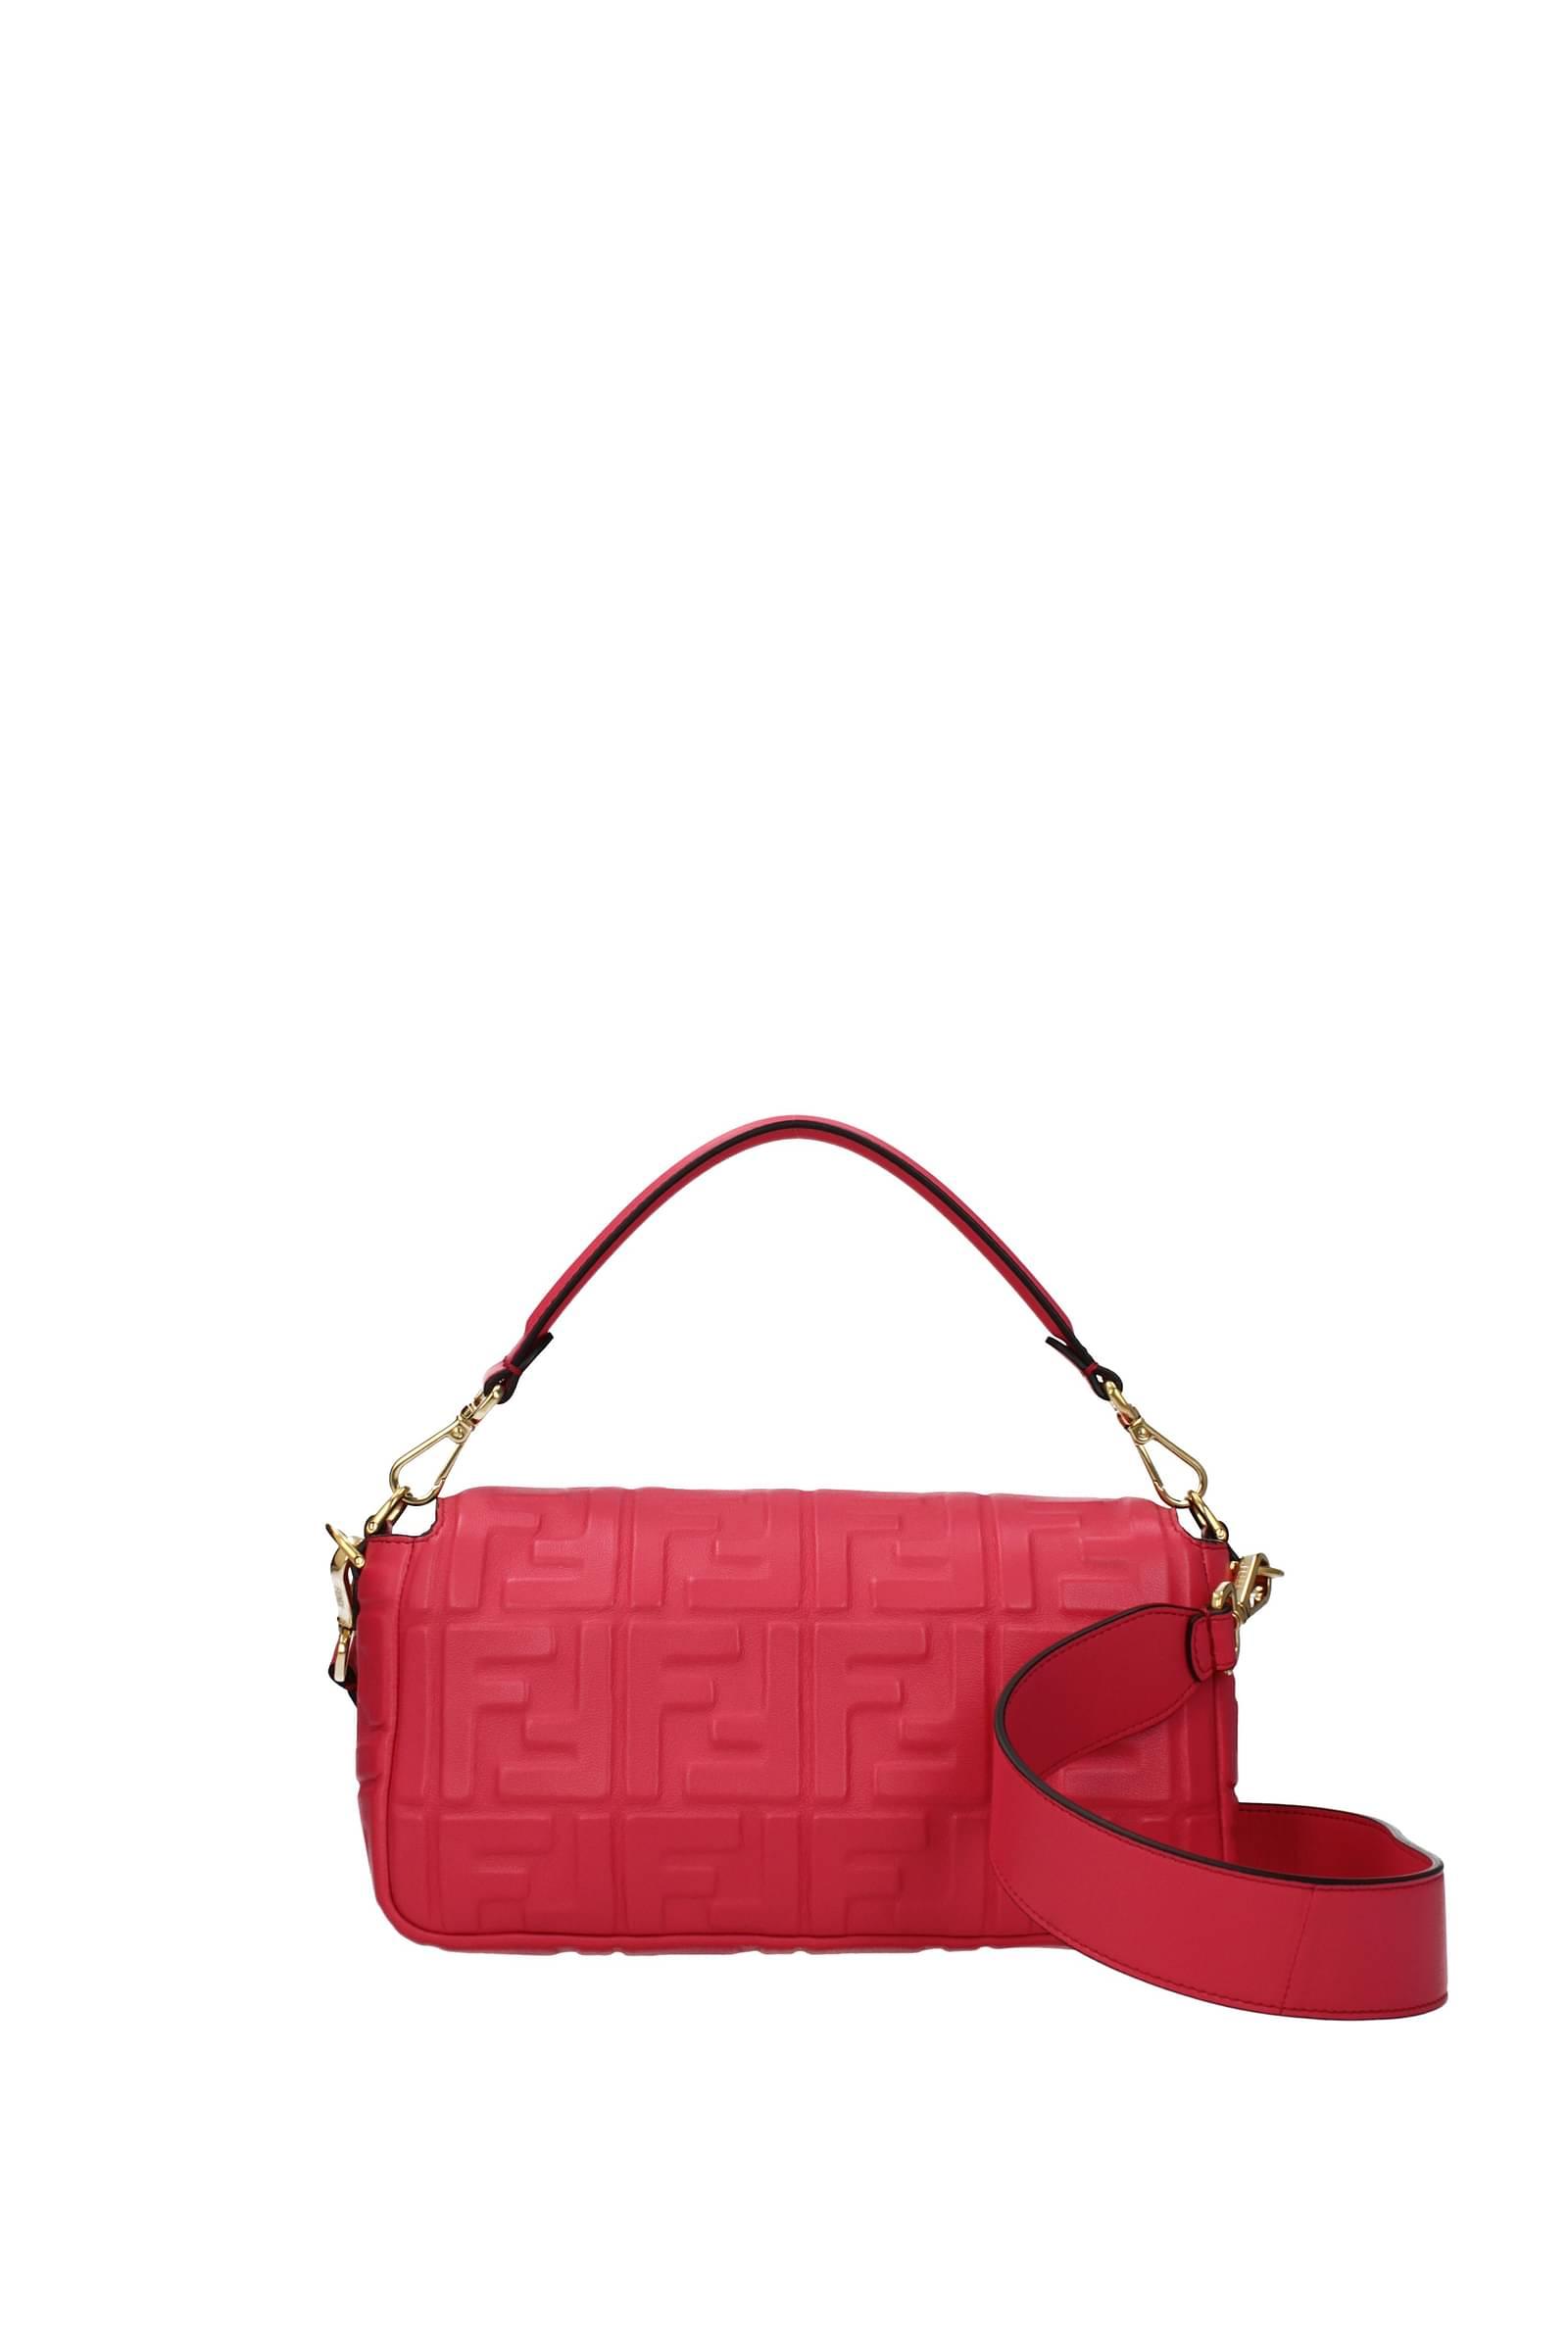 Fendi Baguette bag  Fashion bags, Fendi bags, Pink fendi